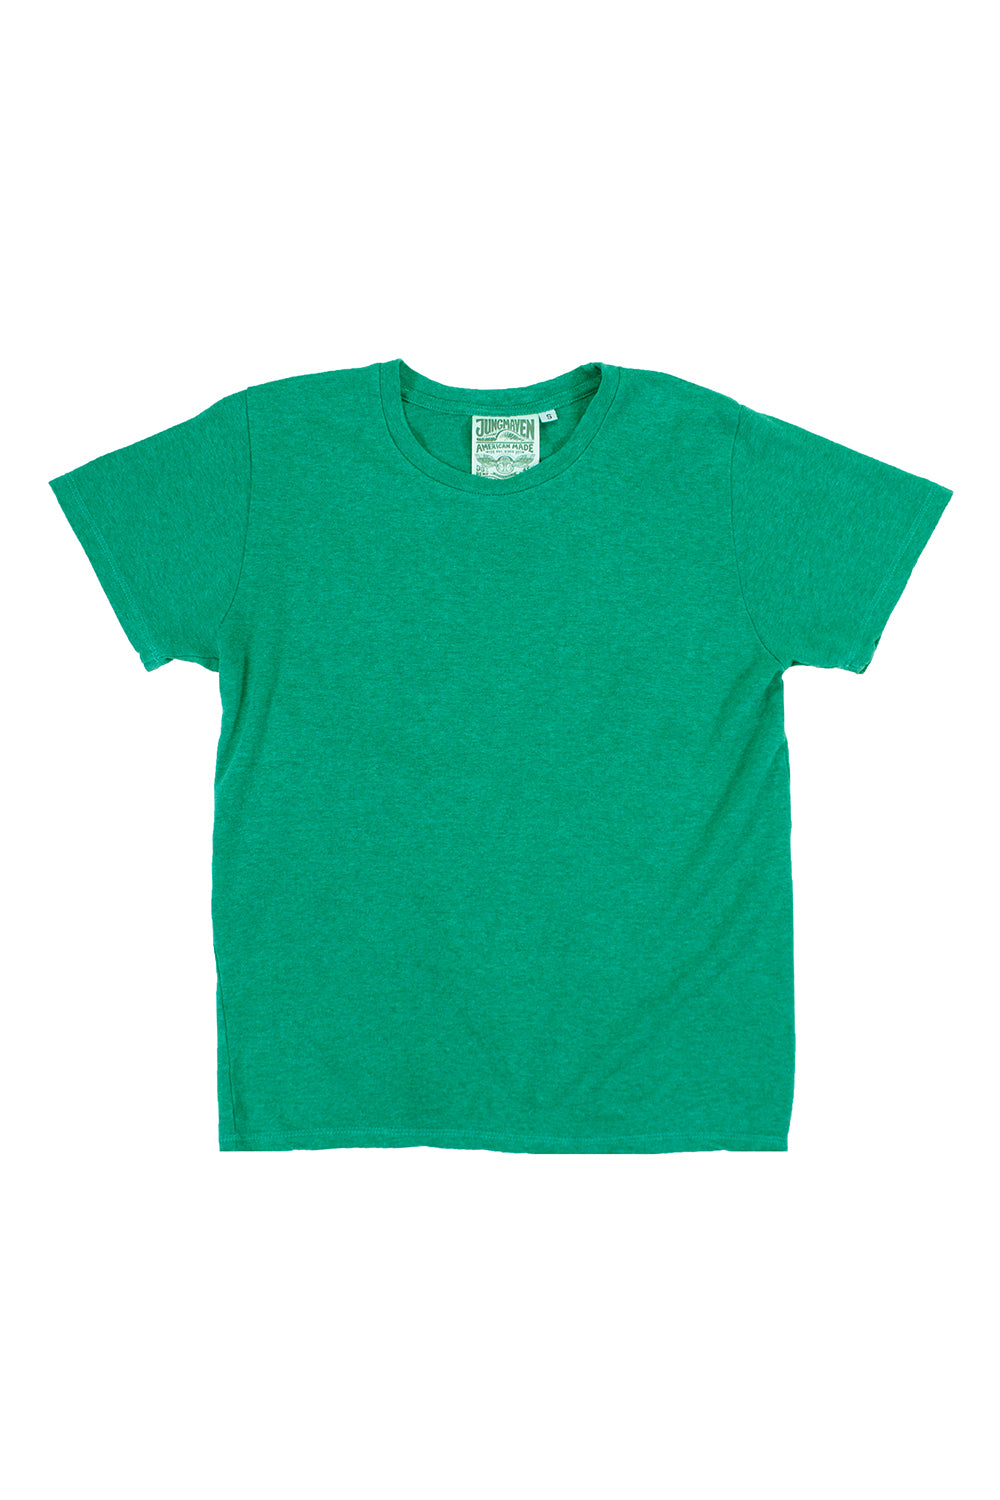 Utah Tee | Jungmaven Hemp Clothing & Accessories / Color: Jade Green